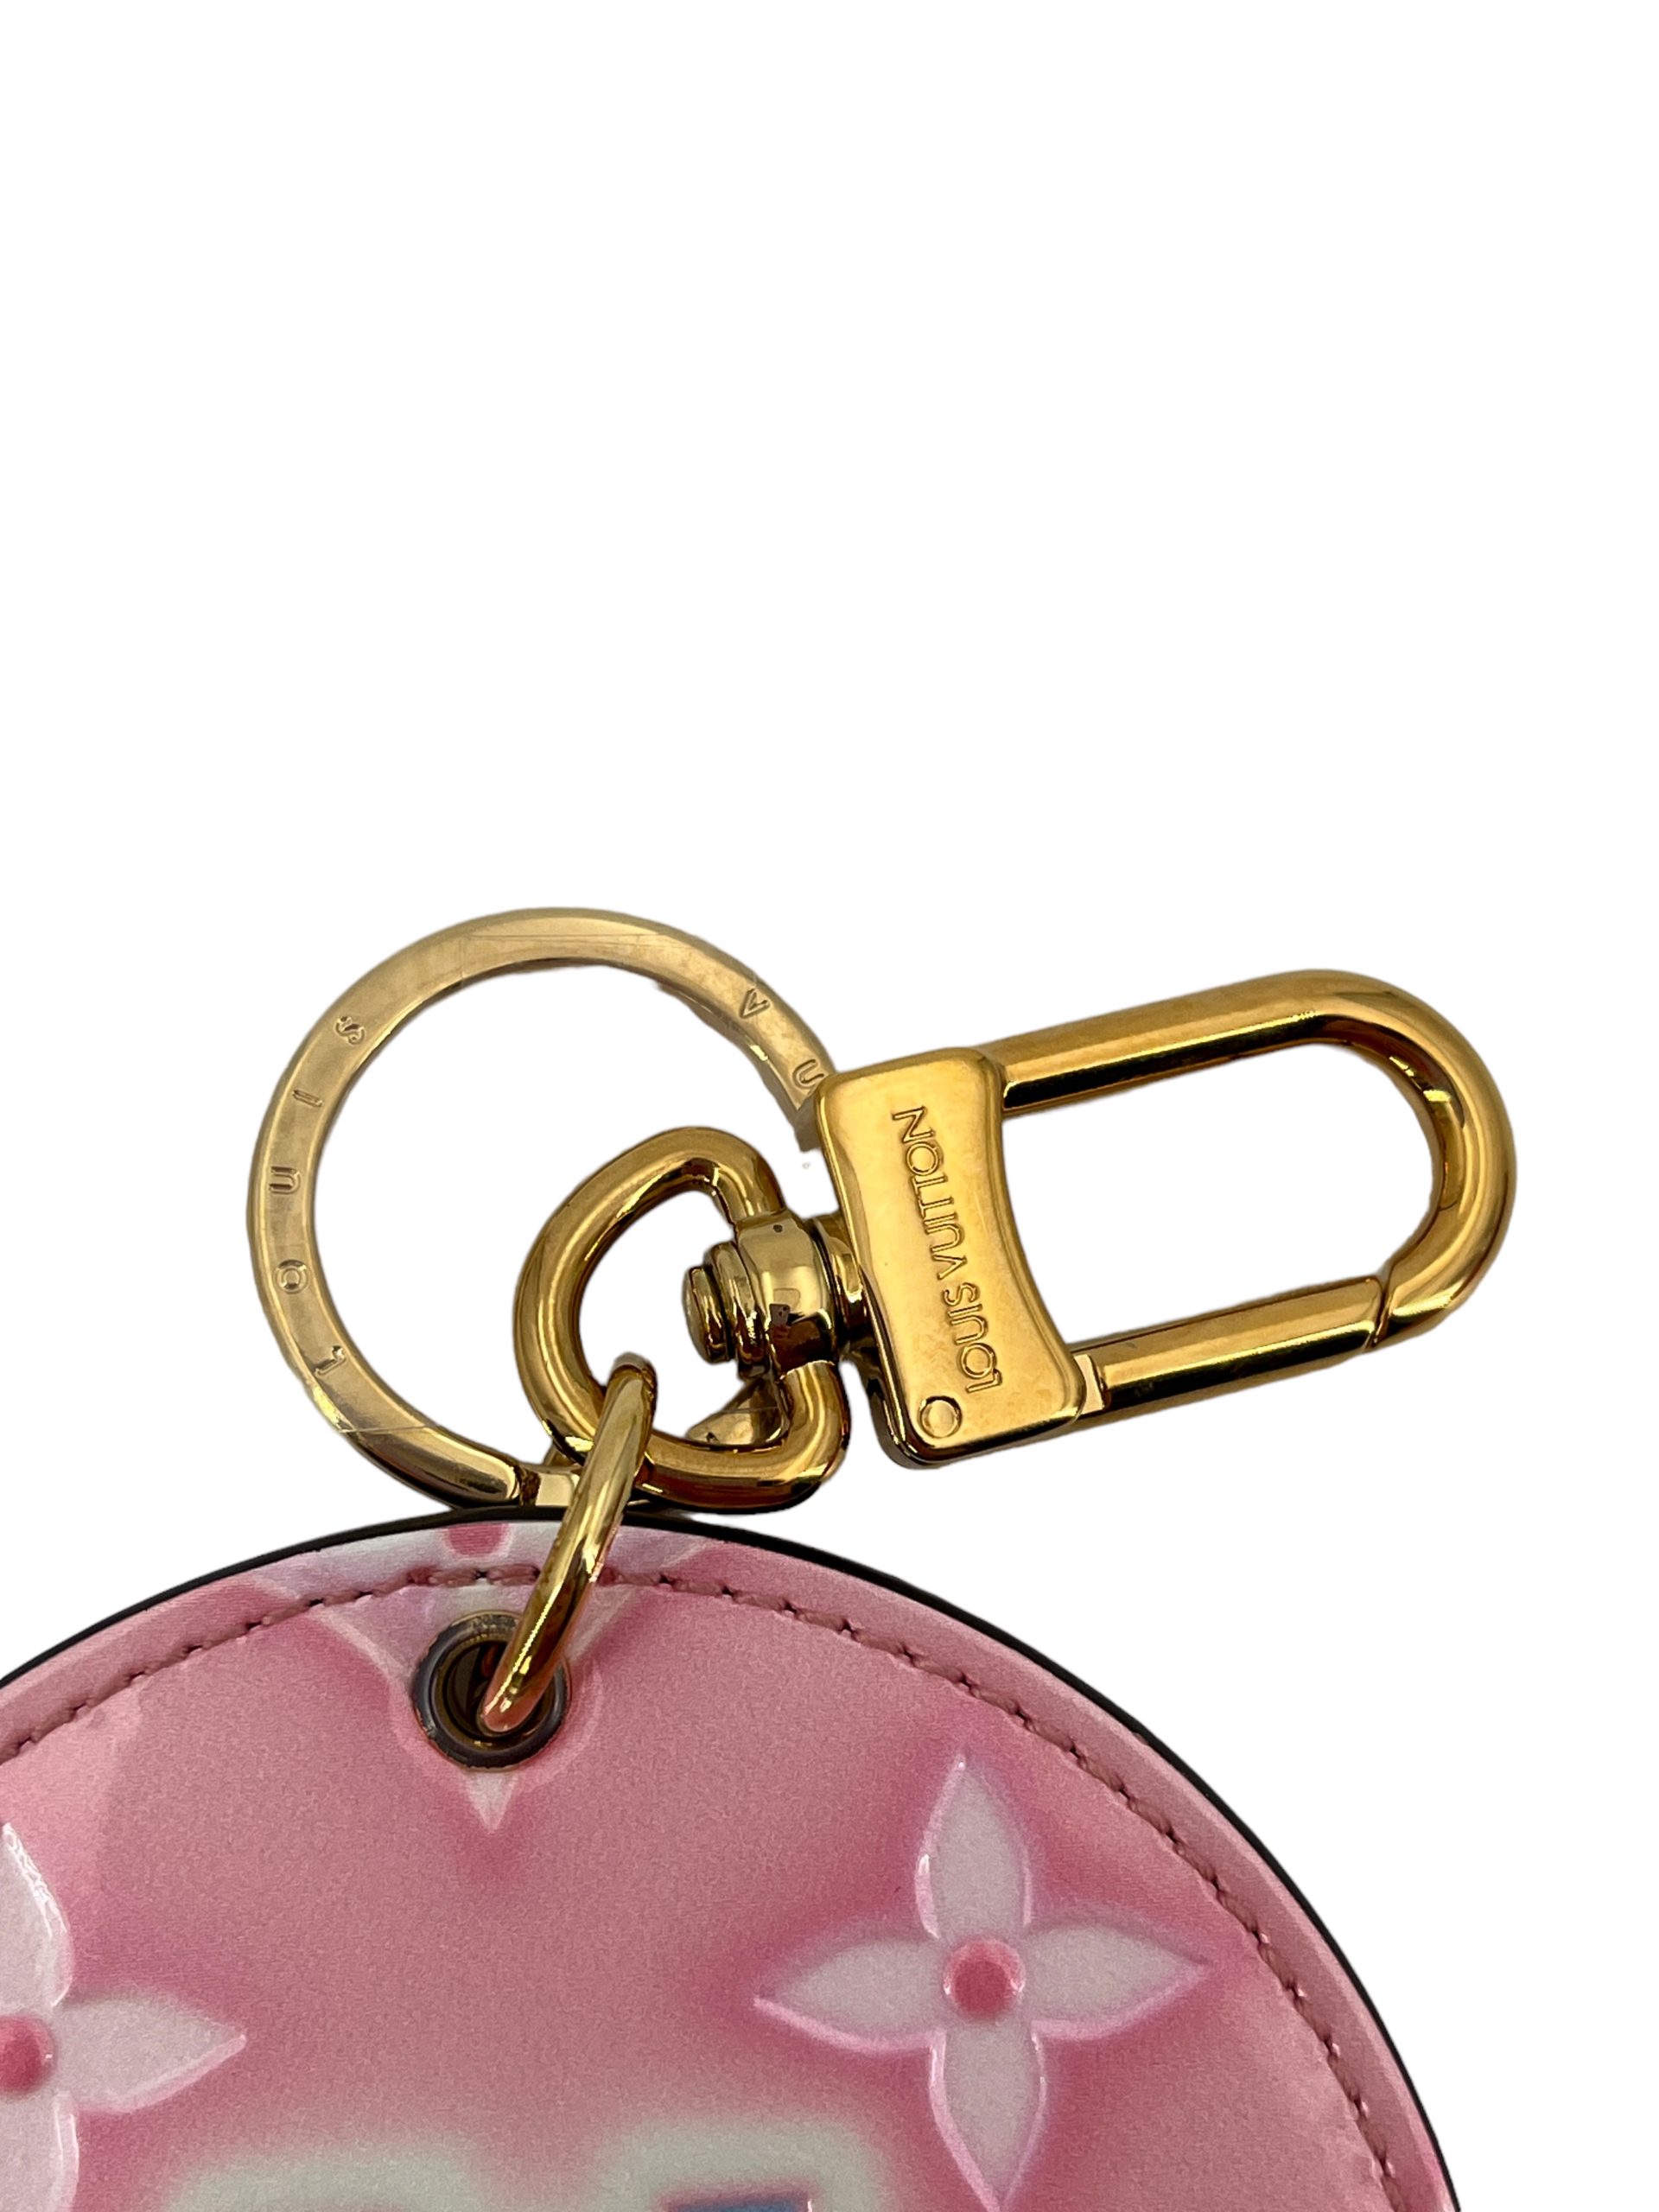 Louis Vuitton Valentine's Day ILLUSTRE Bag Charm and Key Holder